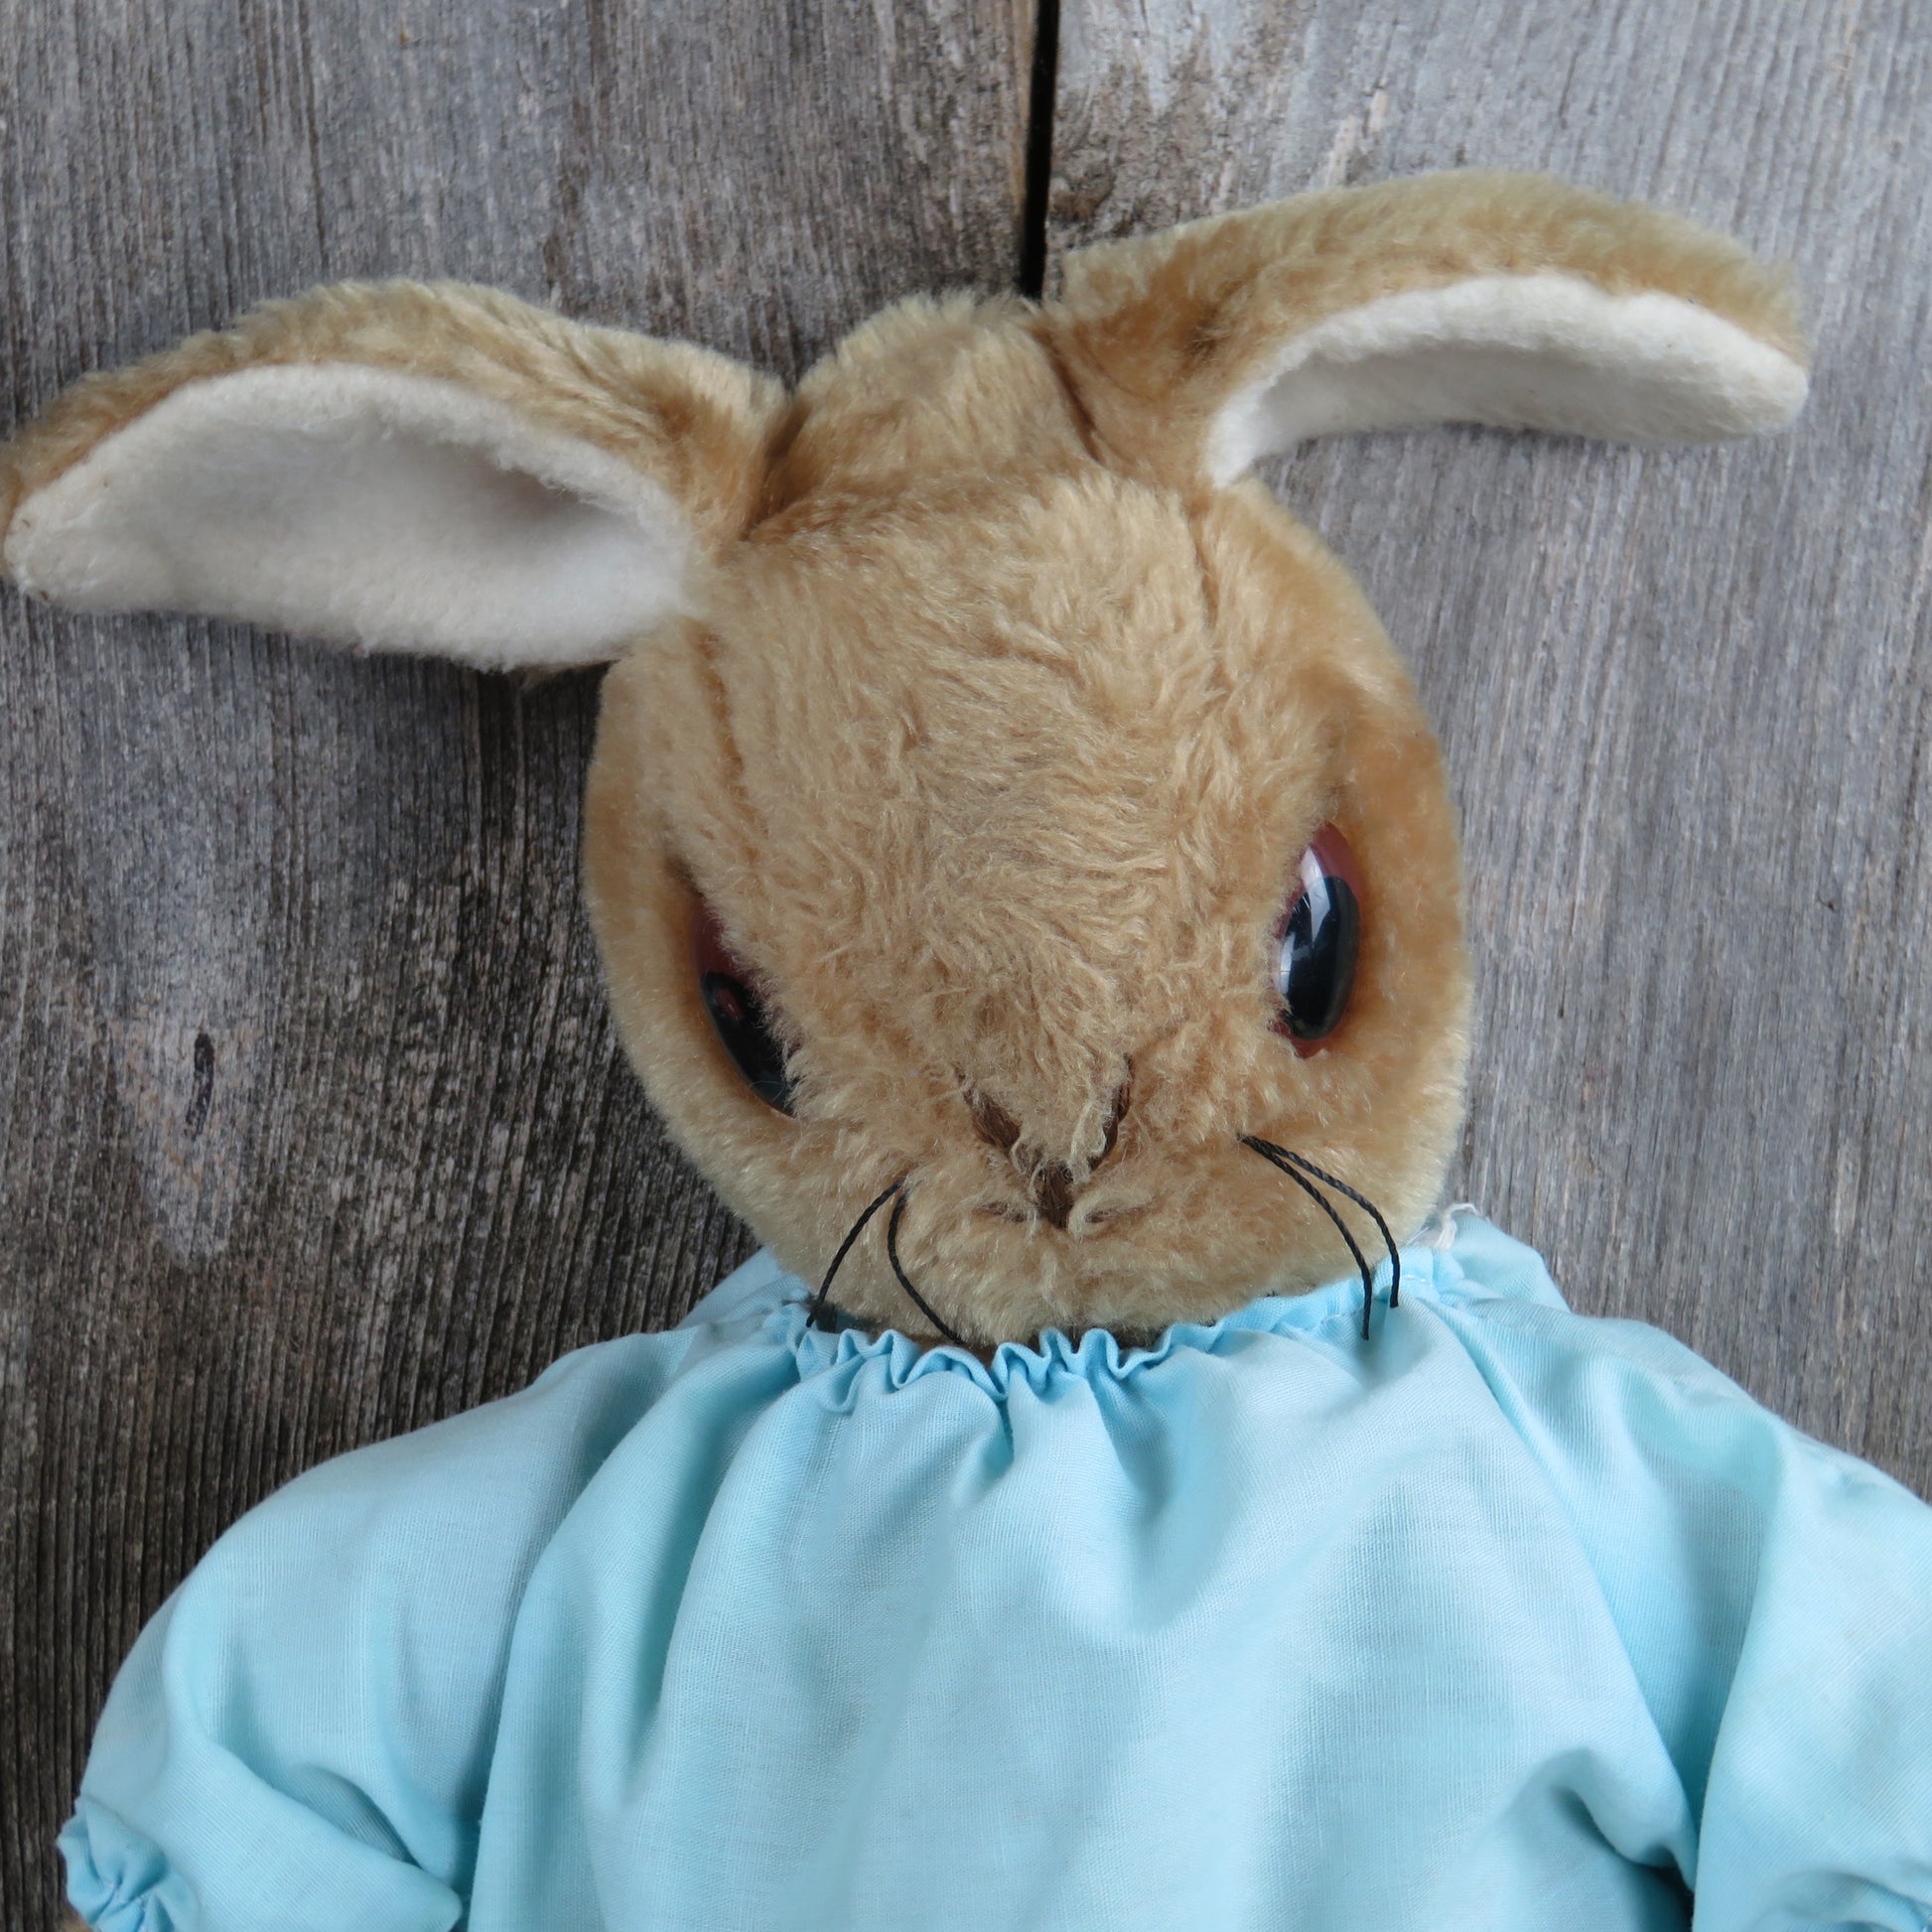 Vintage Bunny Plush Eden Rabbit Peter Standing Blue Dress Night Shirt Easter Stuffed Animal USA - At Grandma's Table